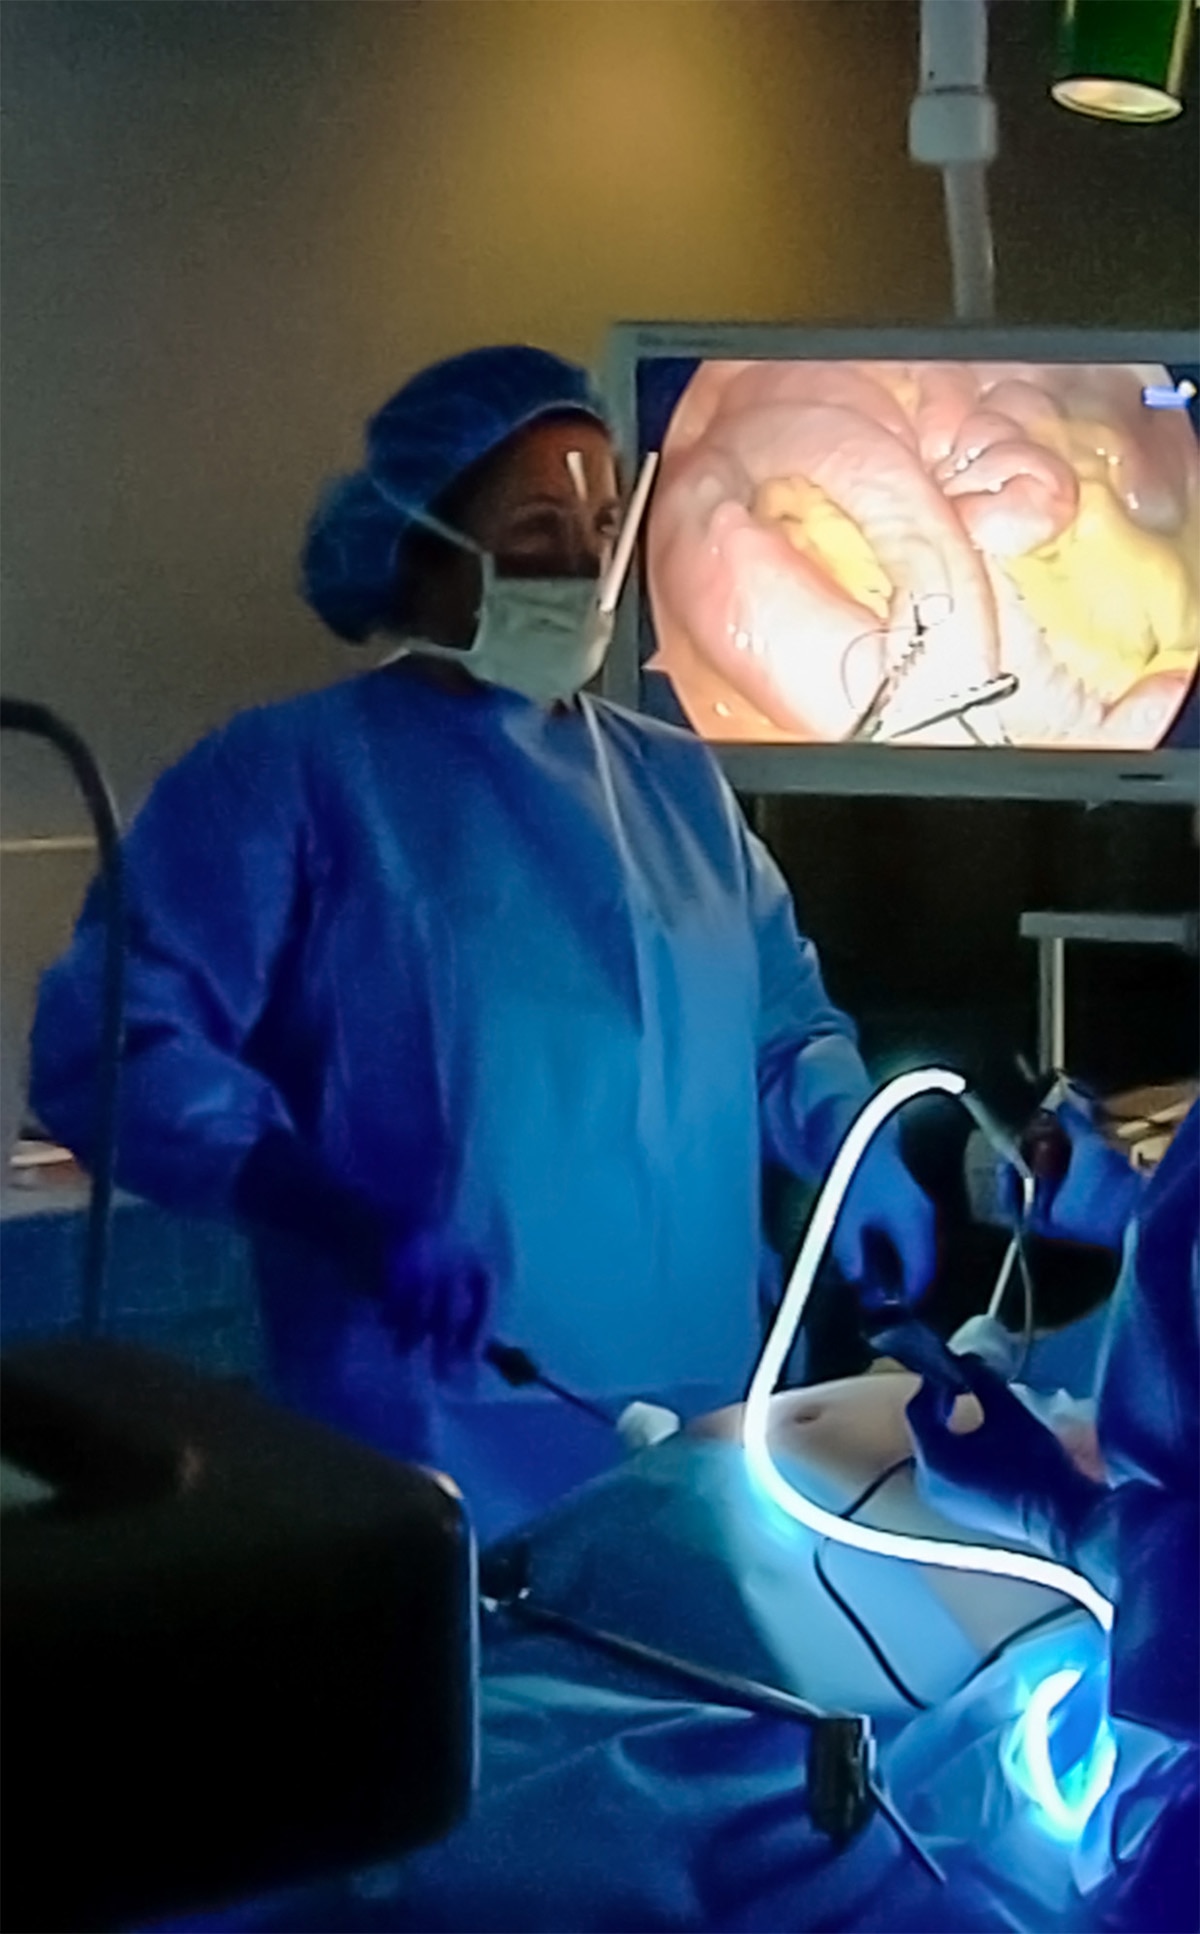 A surgeon performs an abdominal laparoscopic surgery.